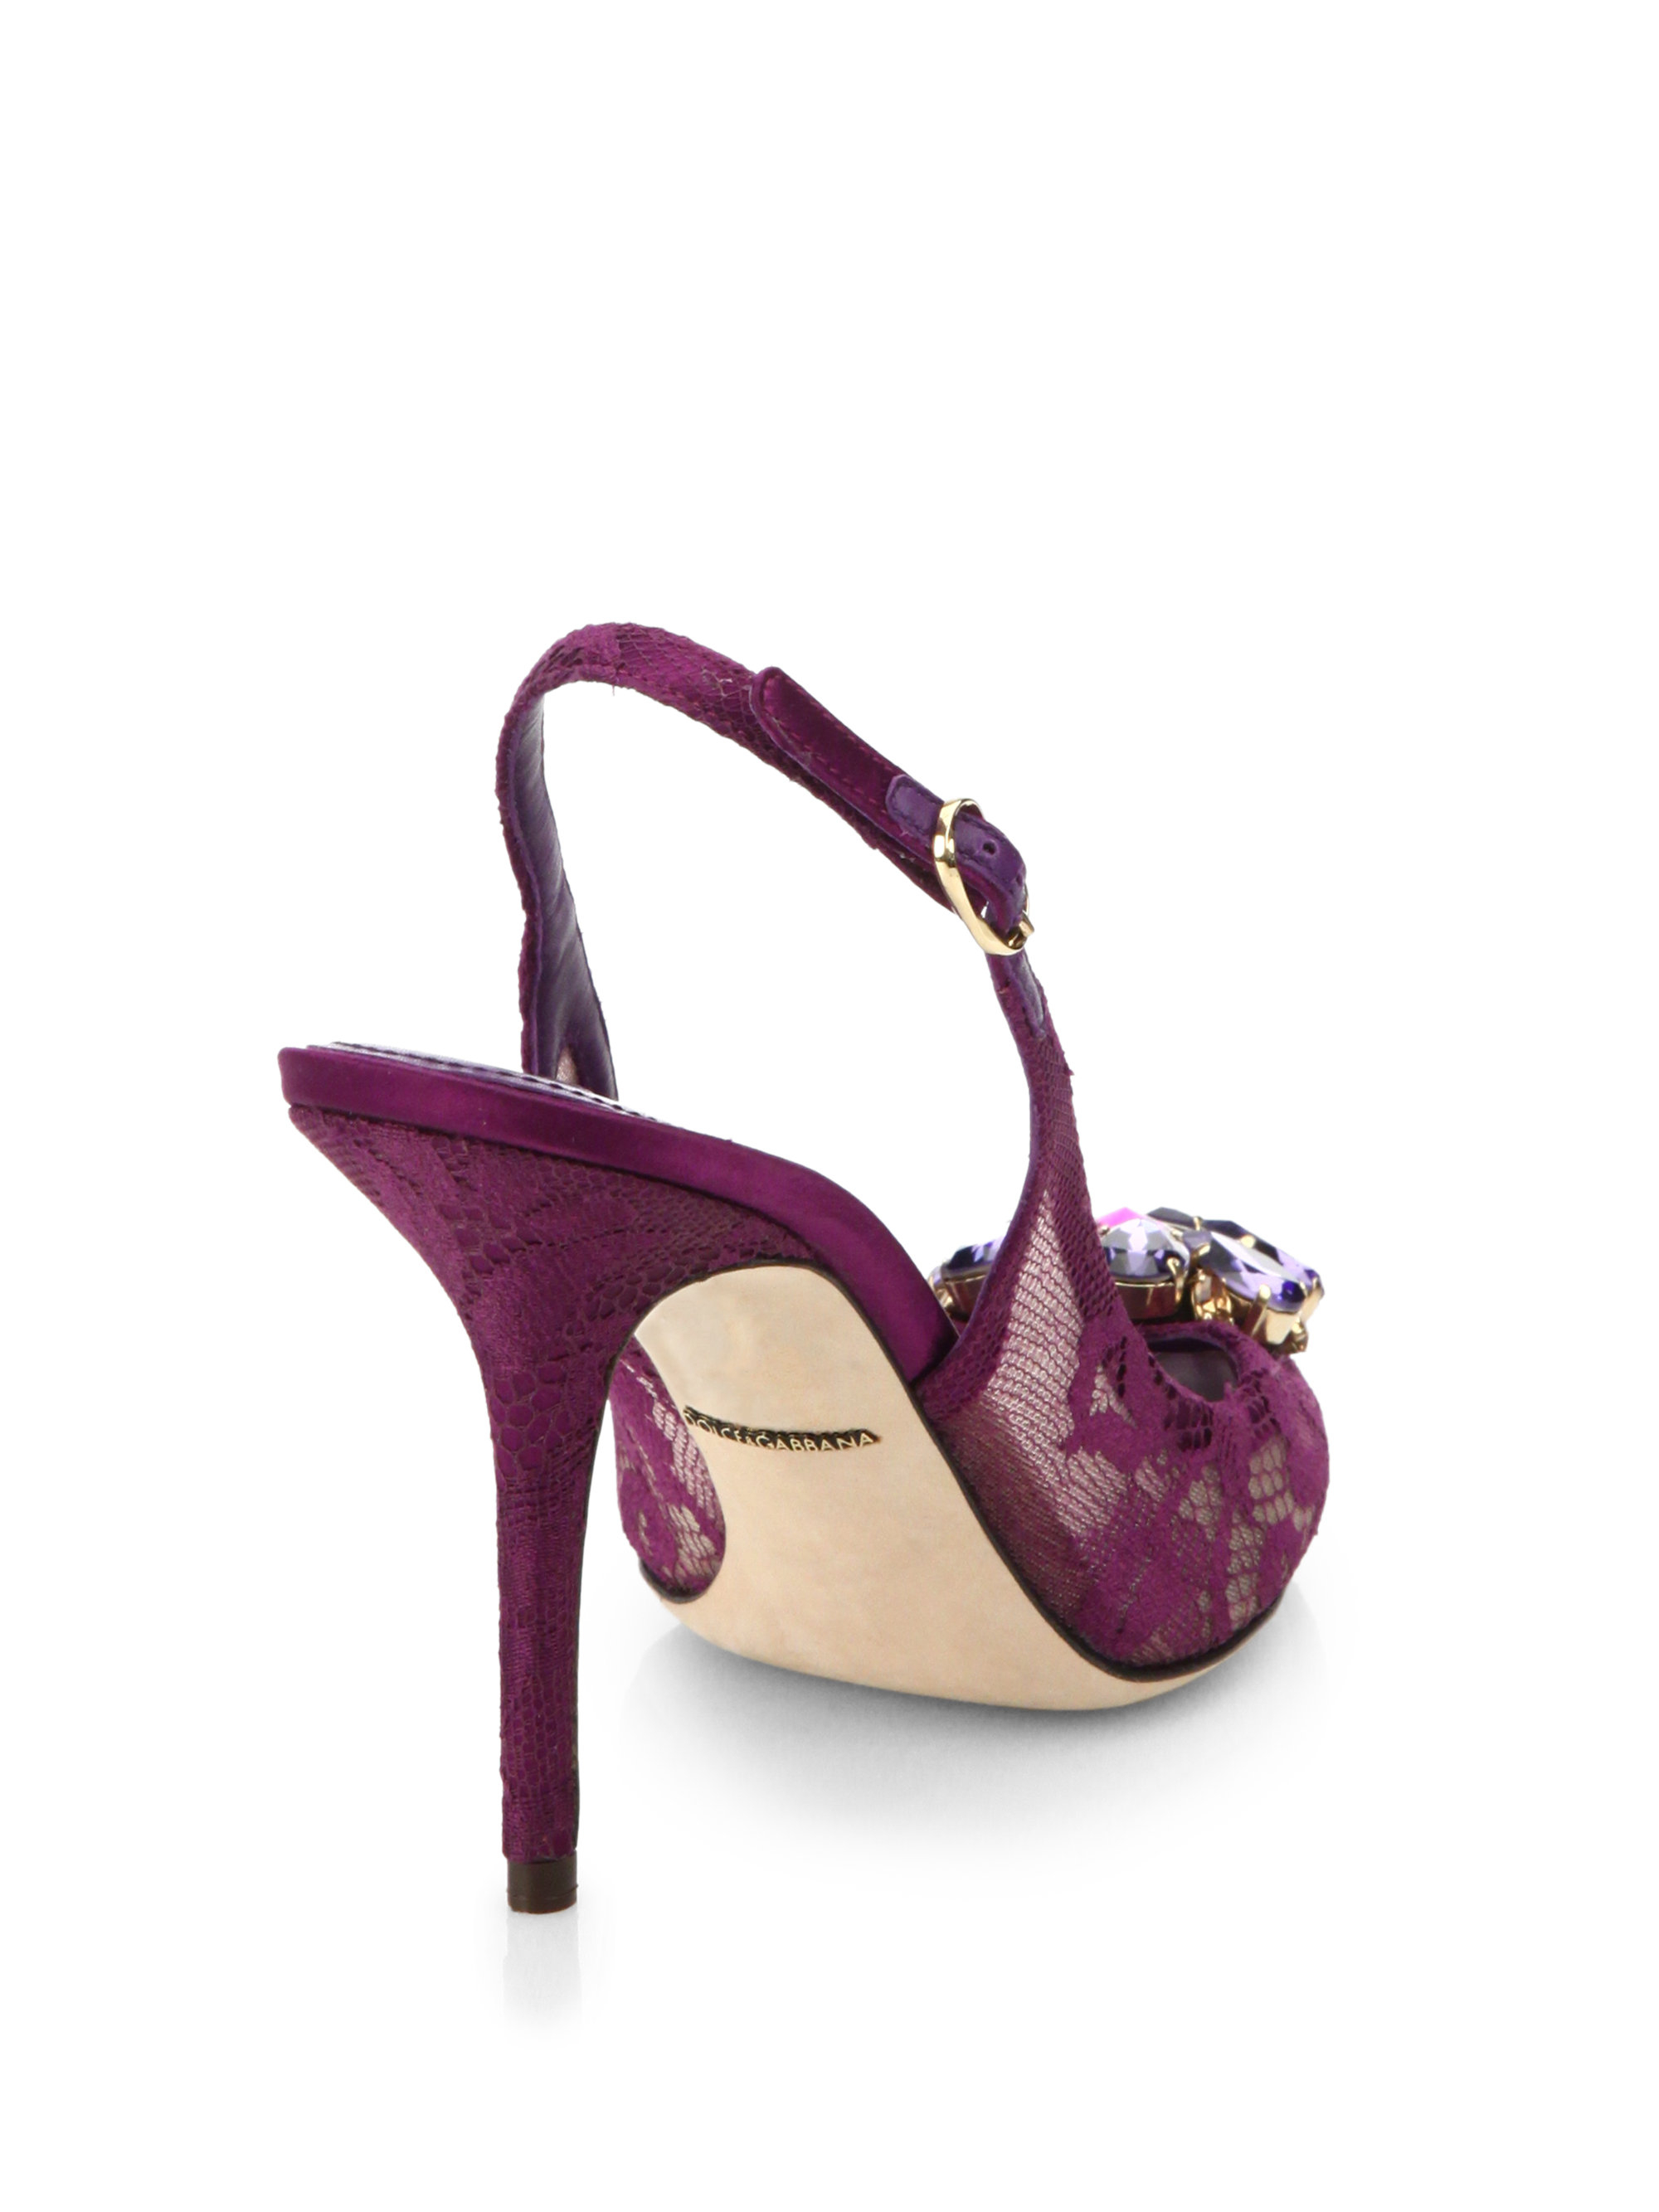 Lyst - Dolce & Gabbana Embellished Lace Slingback Pumps in Purple